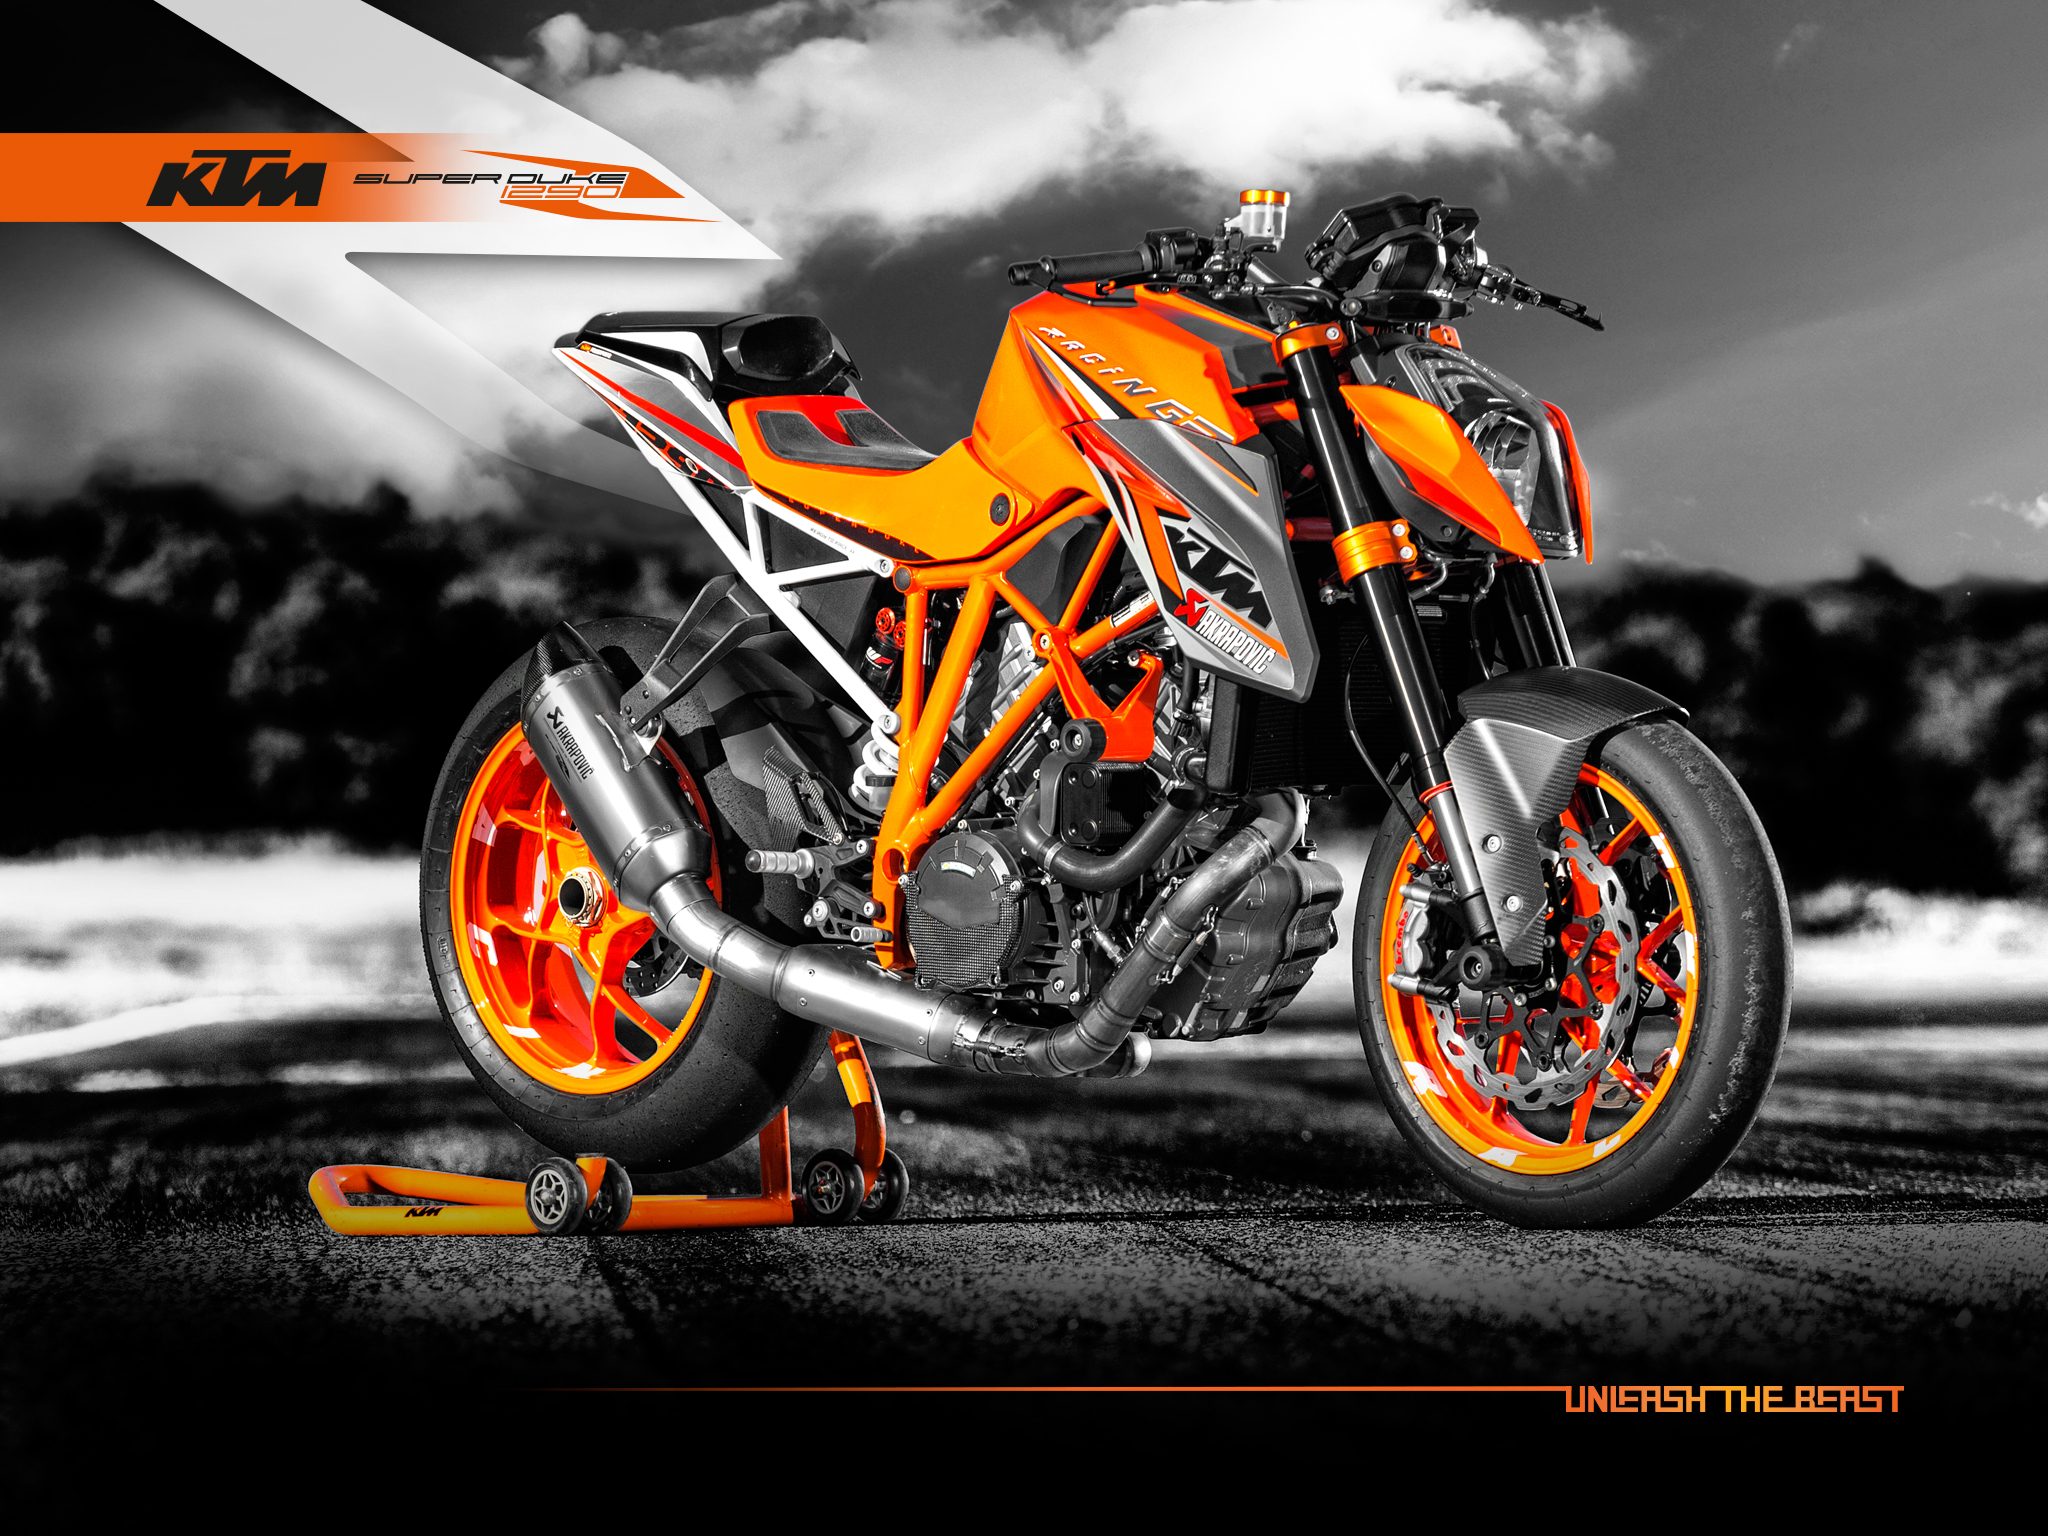 Amazing KTM 1290 Super Duke Pictures & Backgrounds